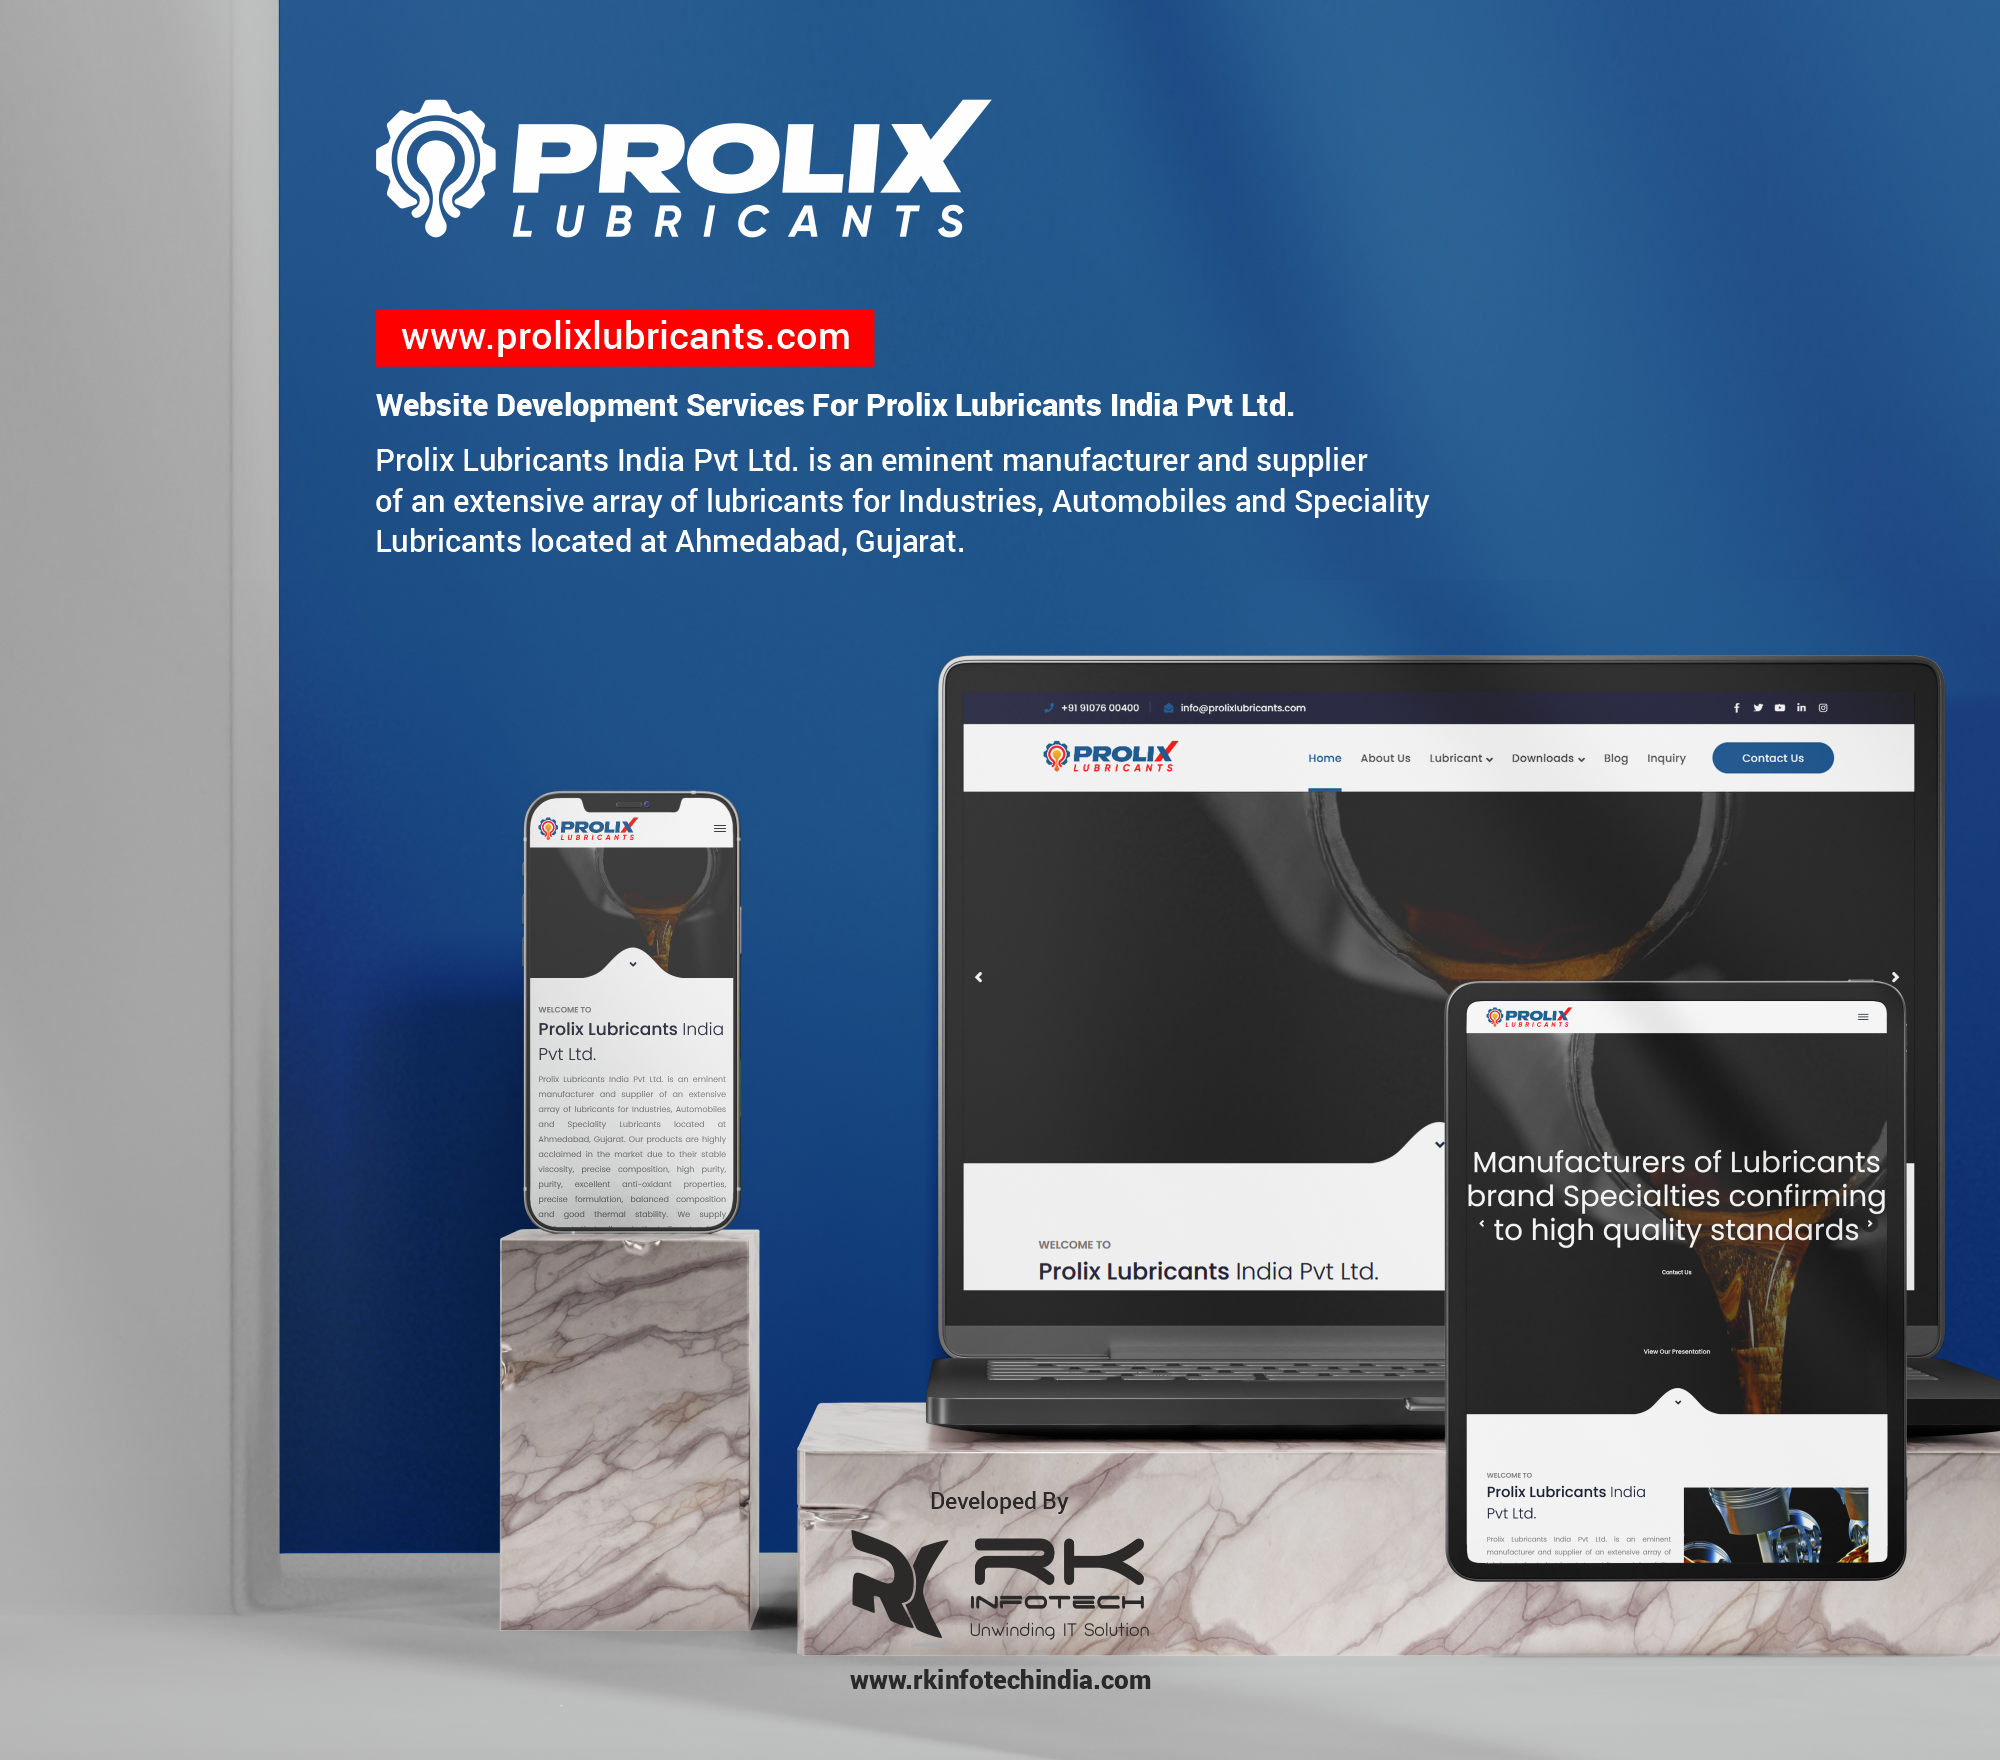 Prolix Lubricants India Pvt Ltd.